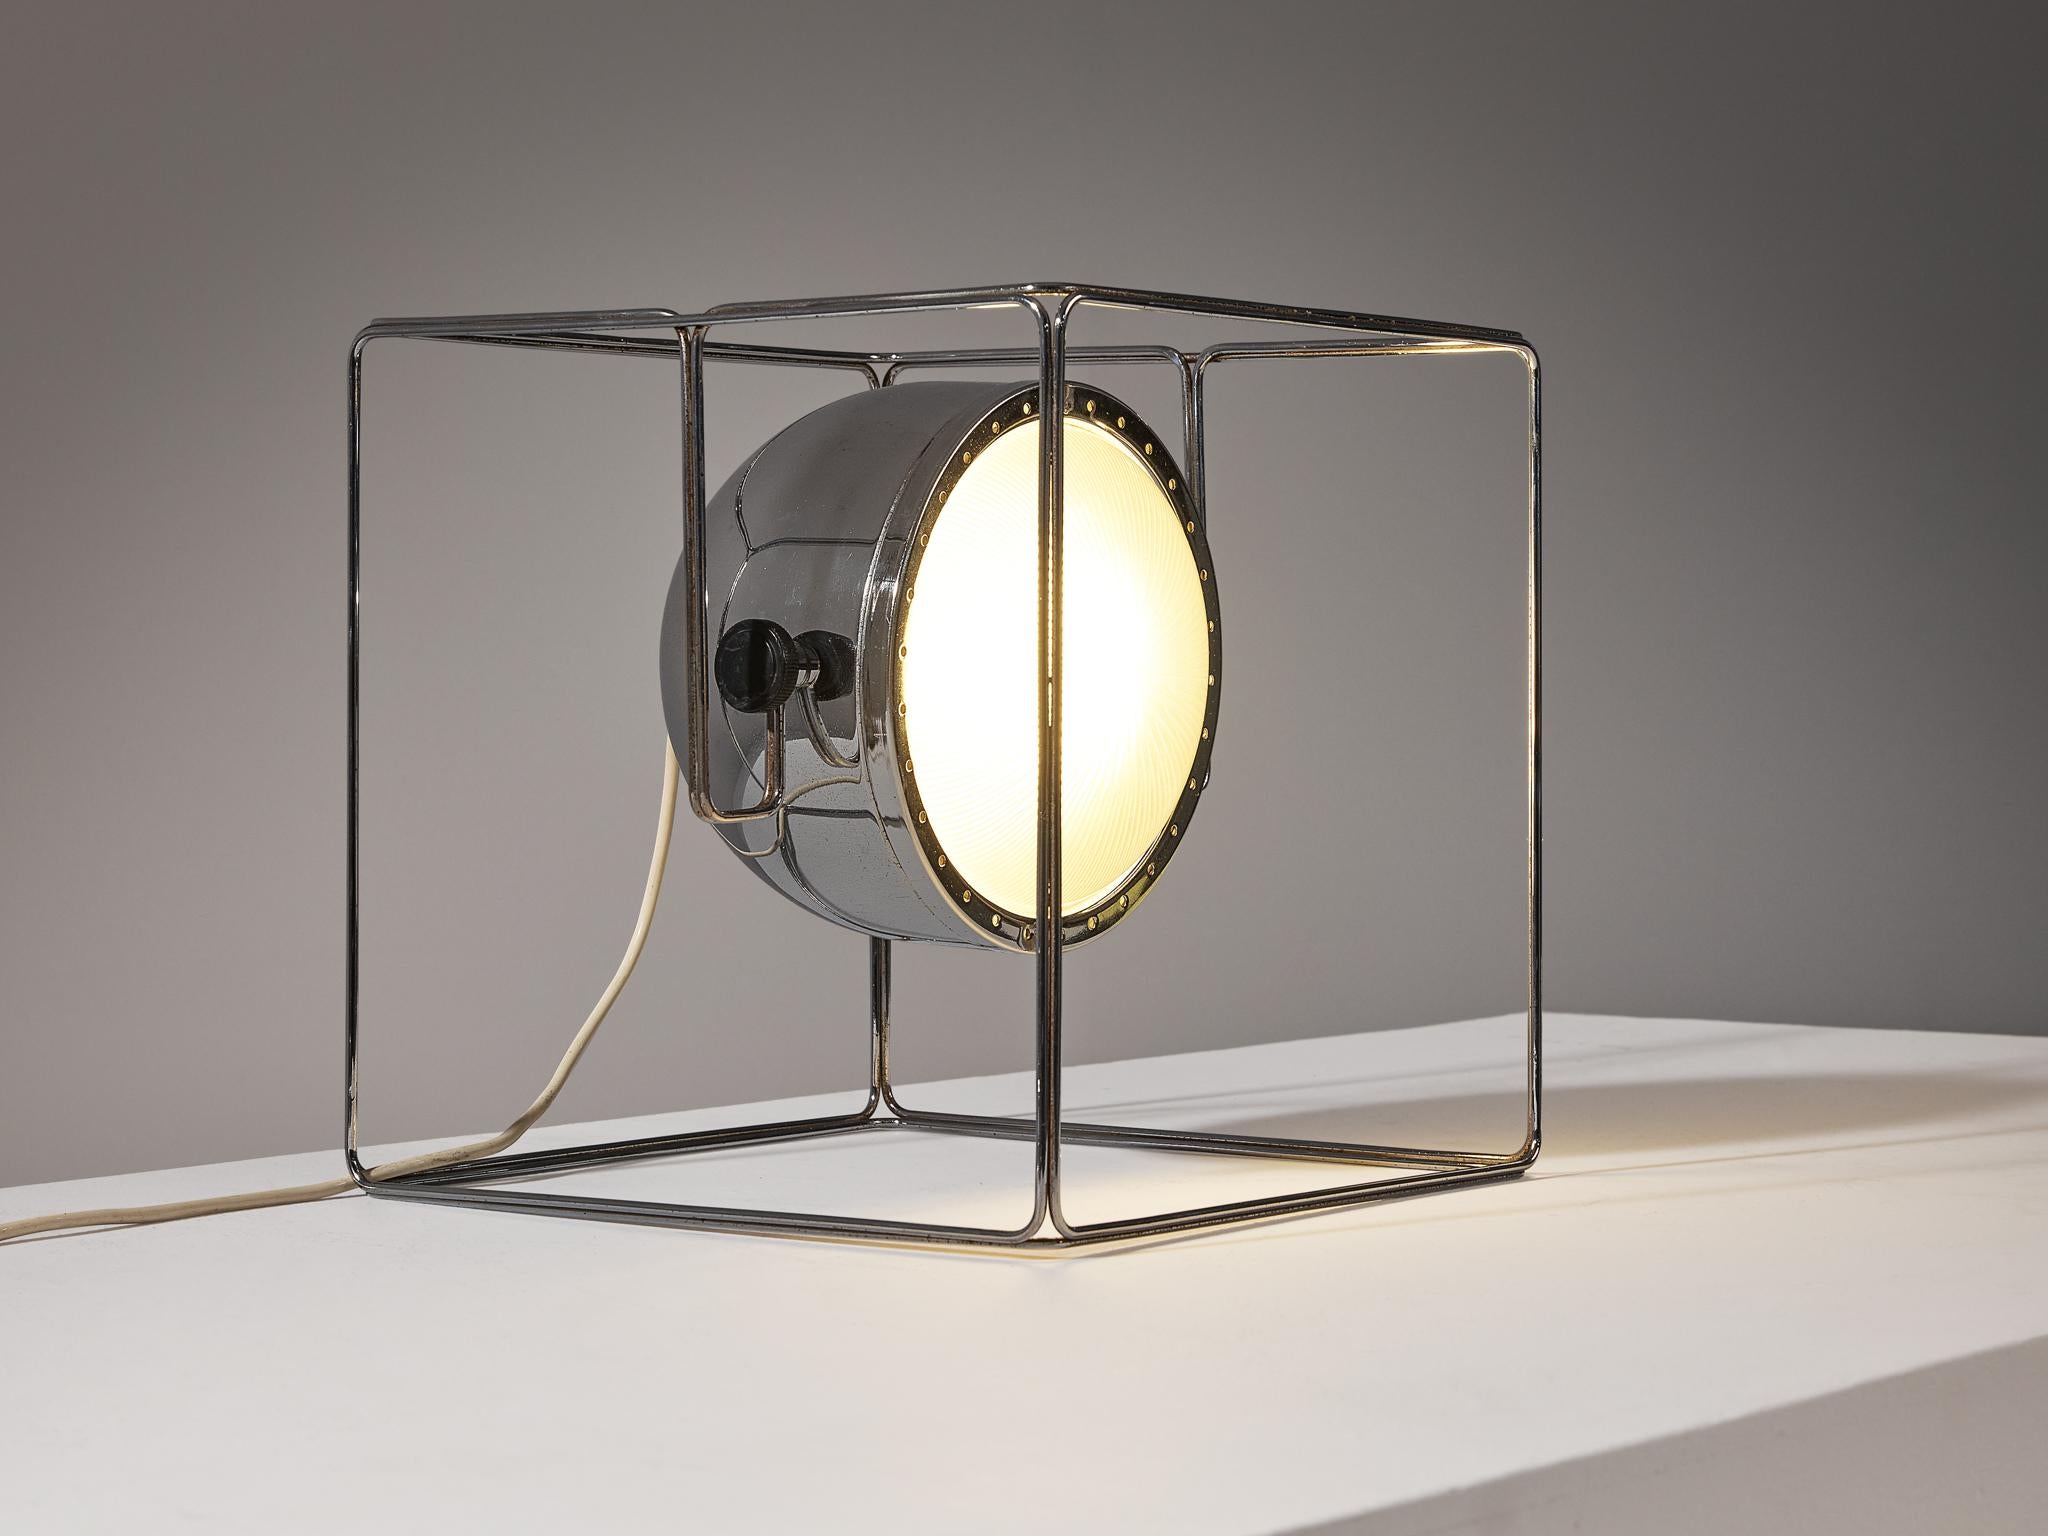 IDEA Studio Tecno Design for Luci Table Lamp in Chrome-Plated Steel 1